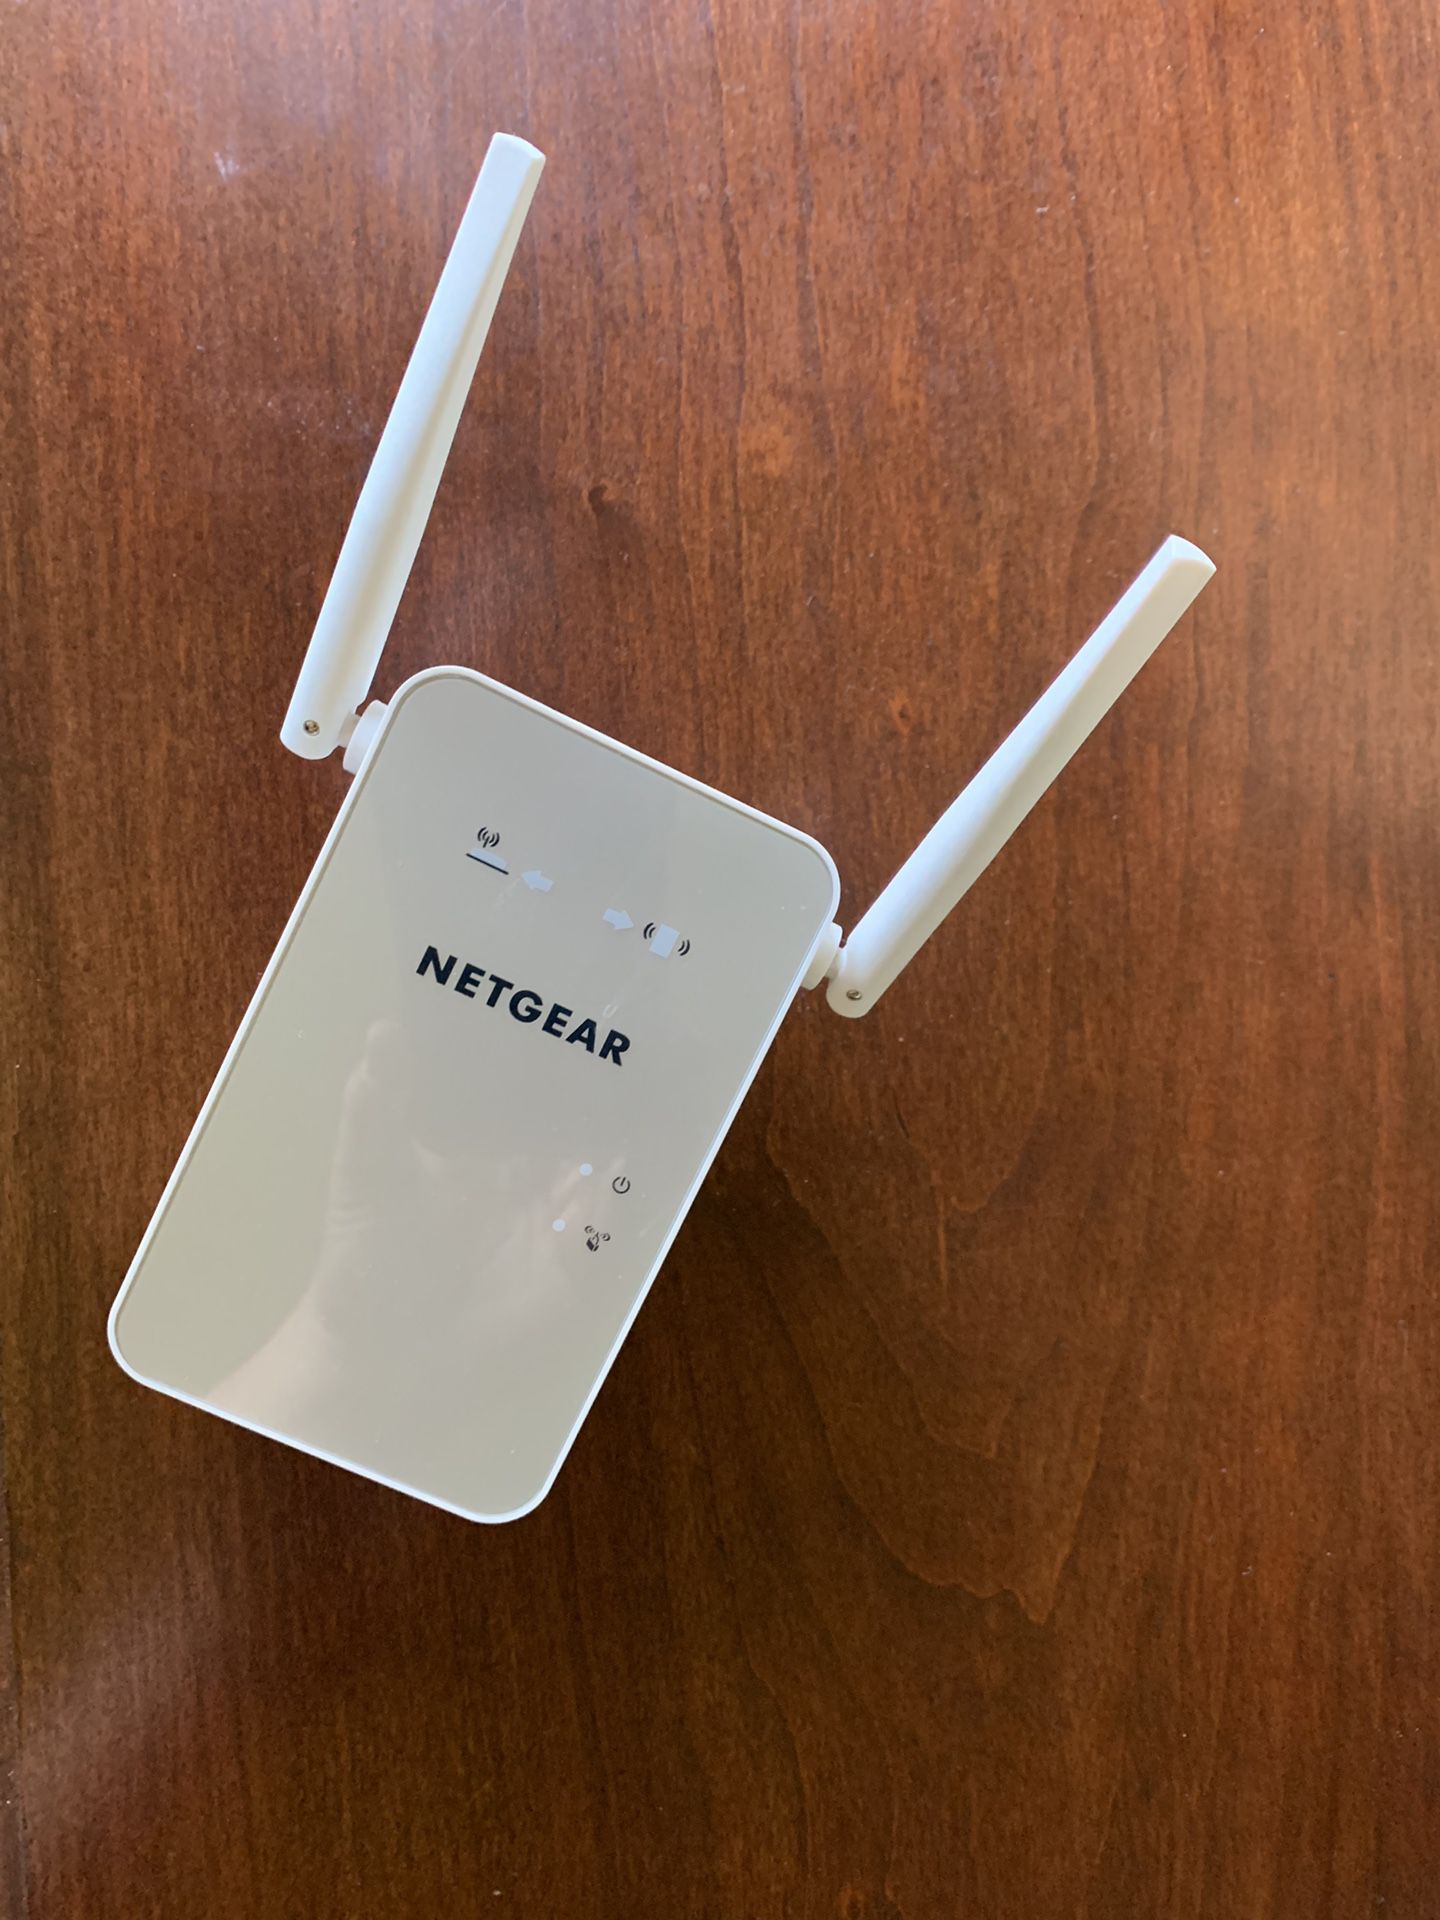 Netgear AC1200 / EX6150 WiFi range extender